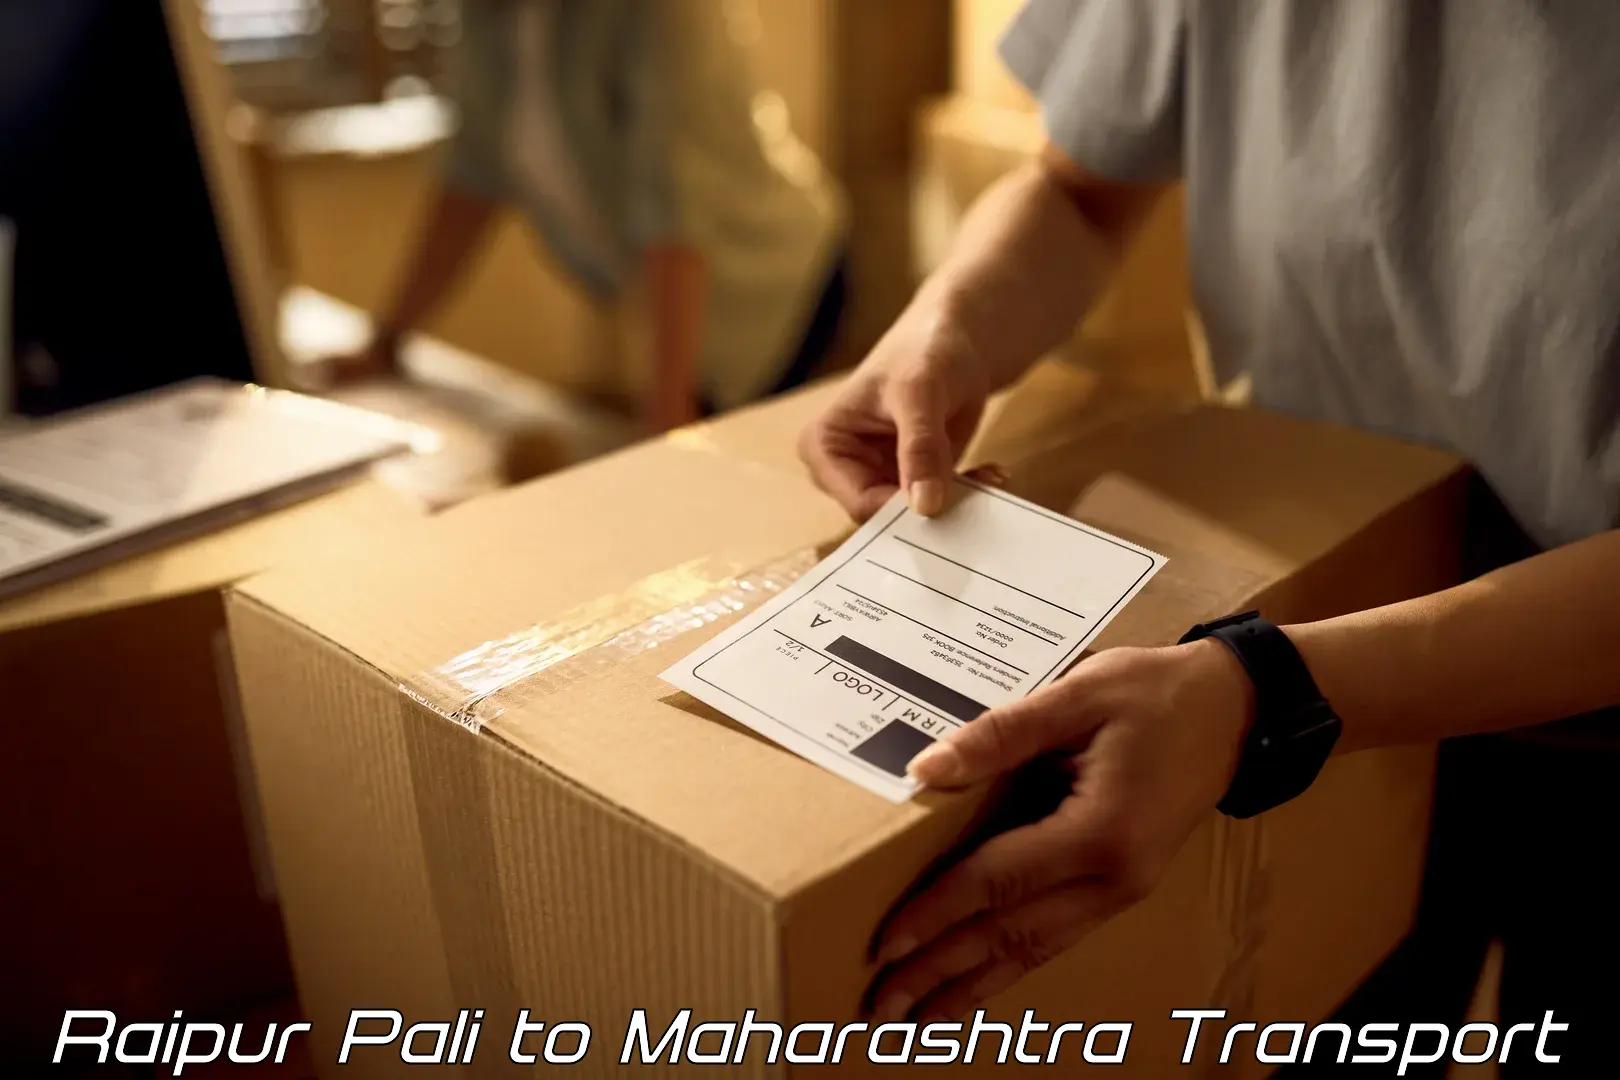 Furniture transport service Raipur Pali to Brahmapuri